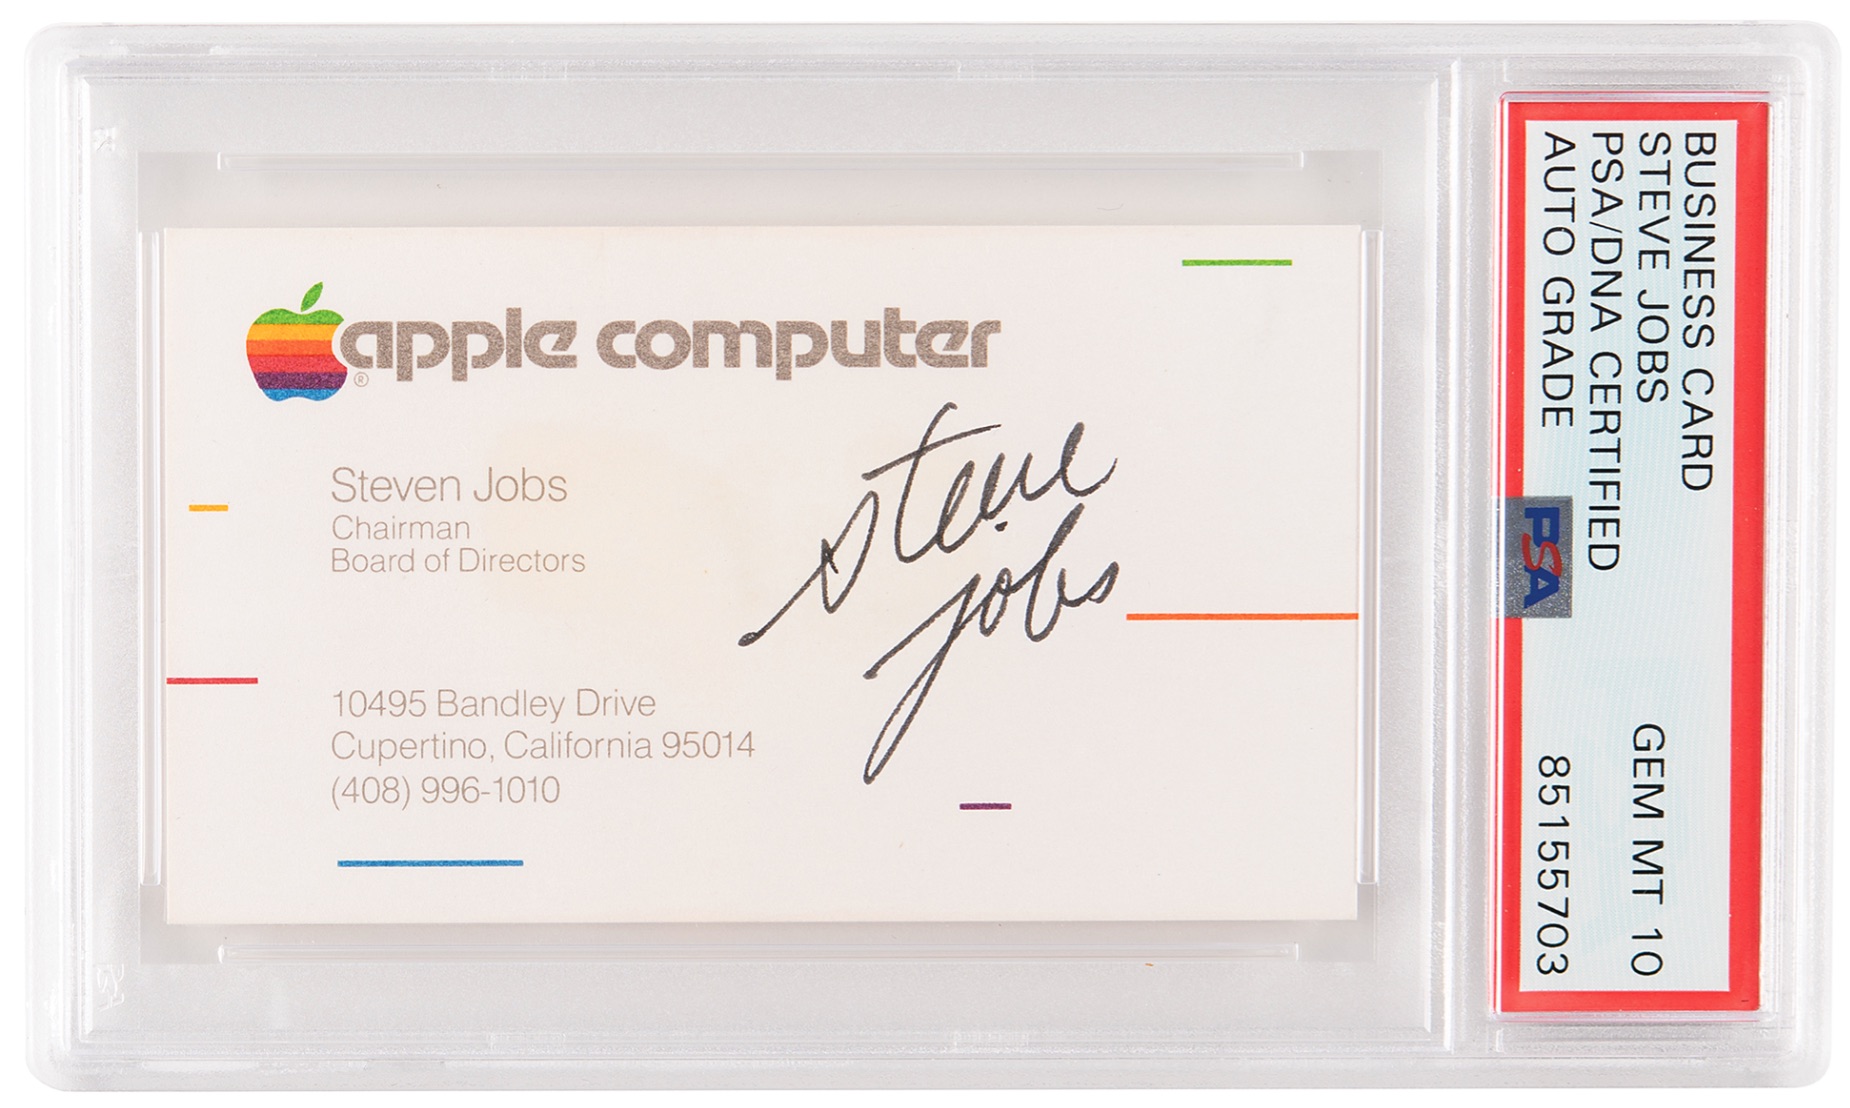 Tarjeta de visita de Steve Jobs firmada por él mismo